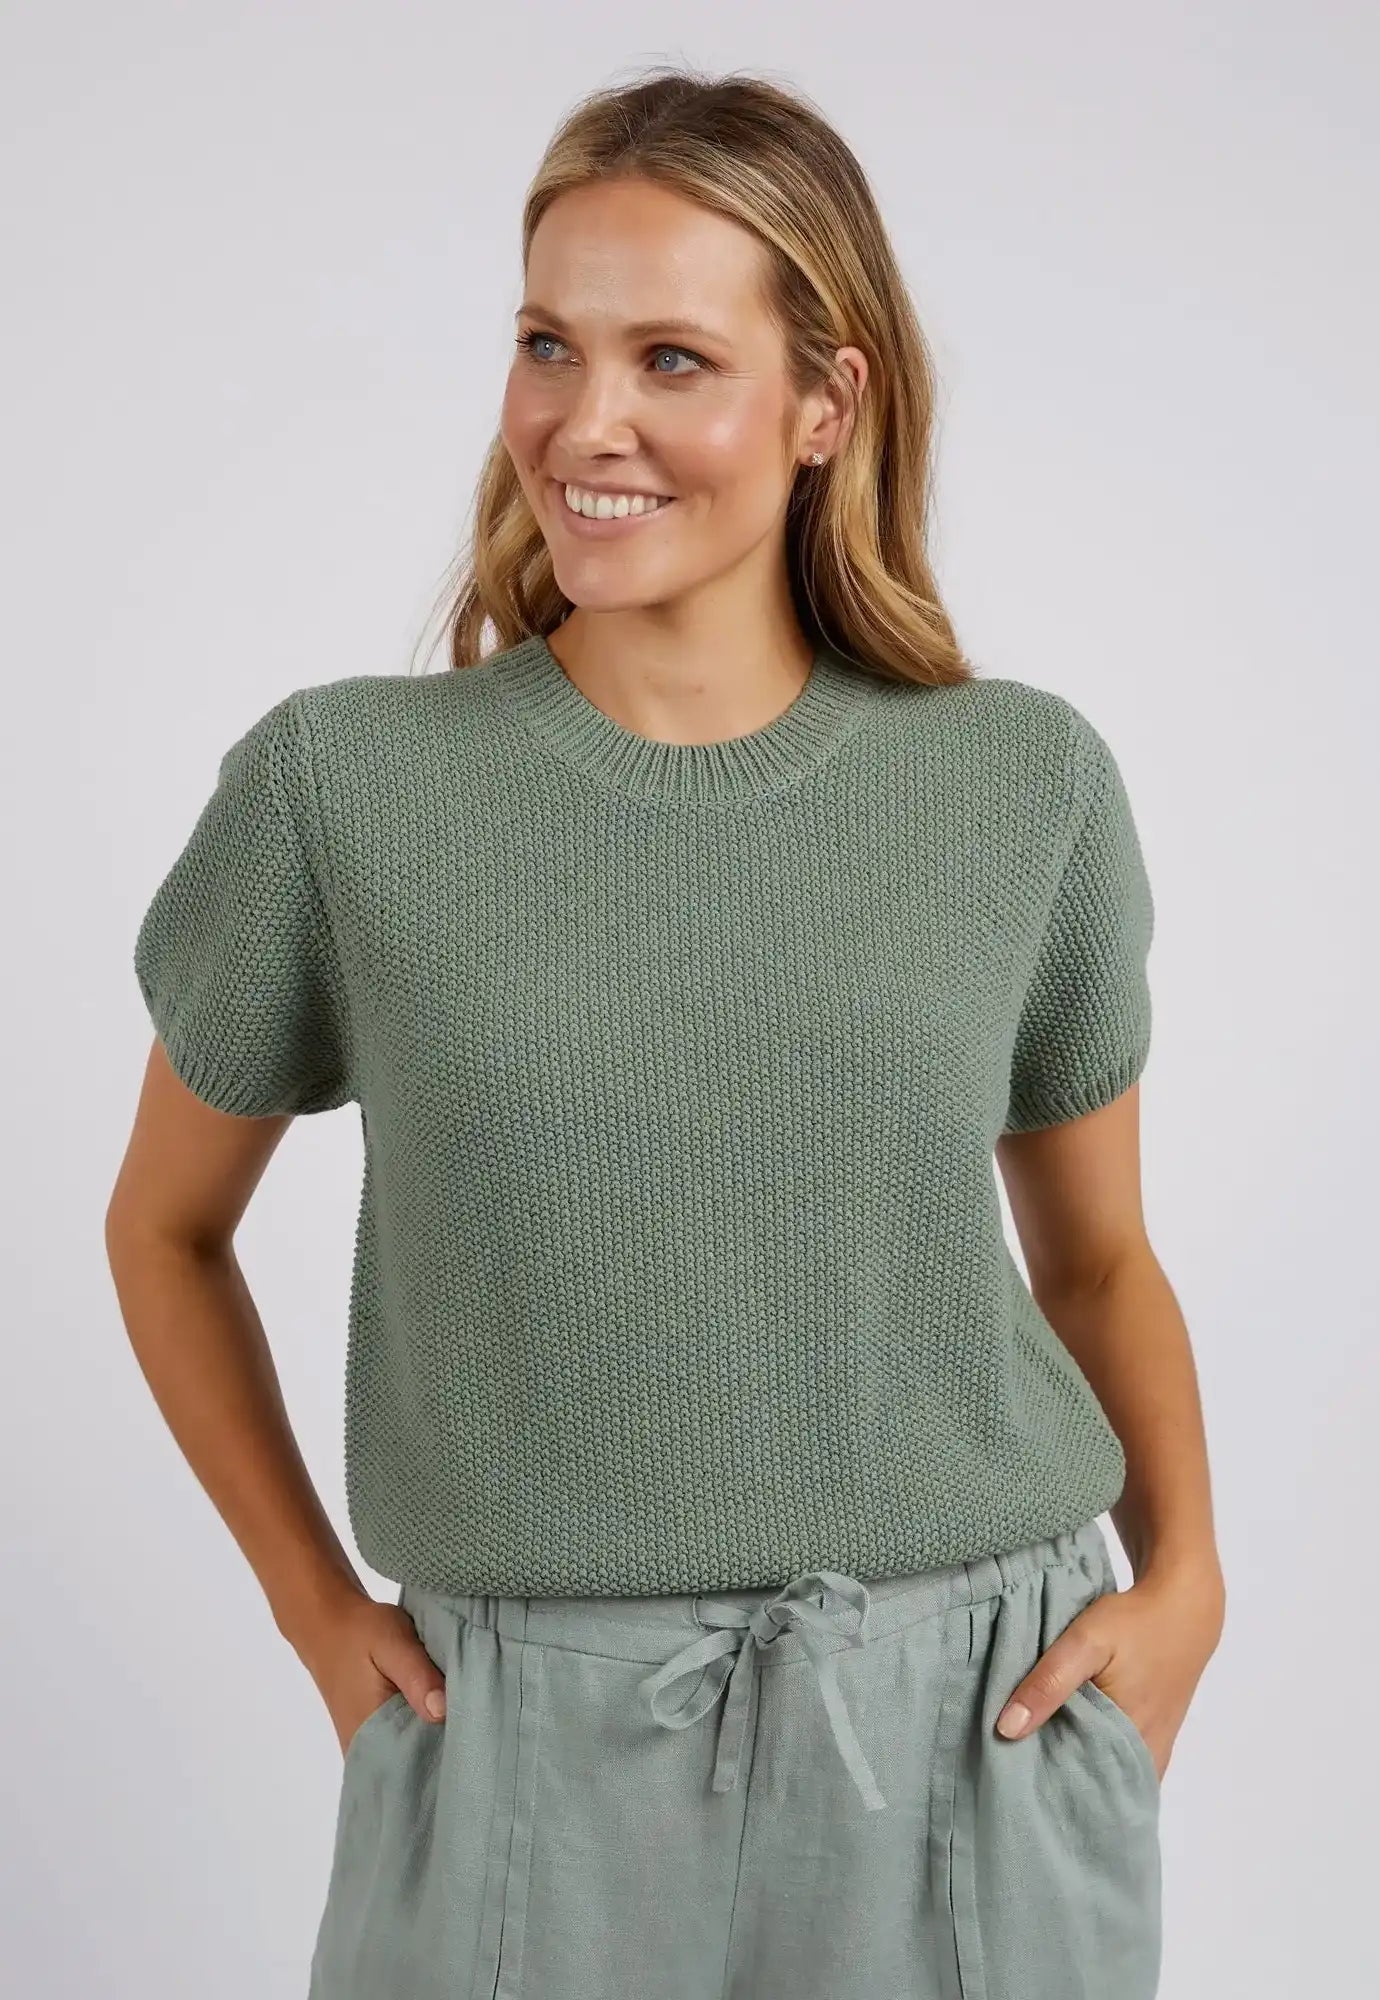 foxwood - blair short sleeve knit - sage green